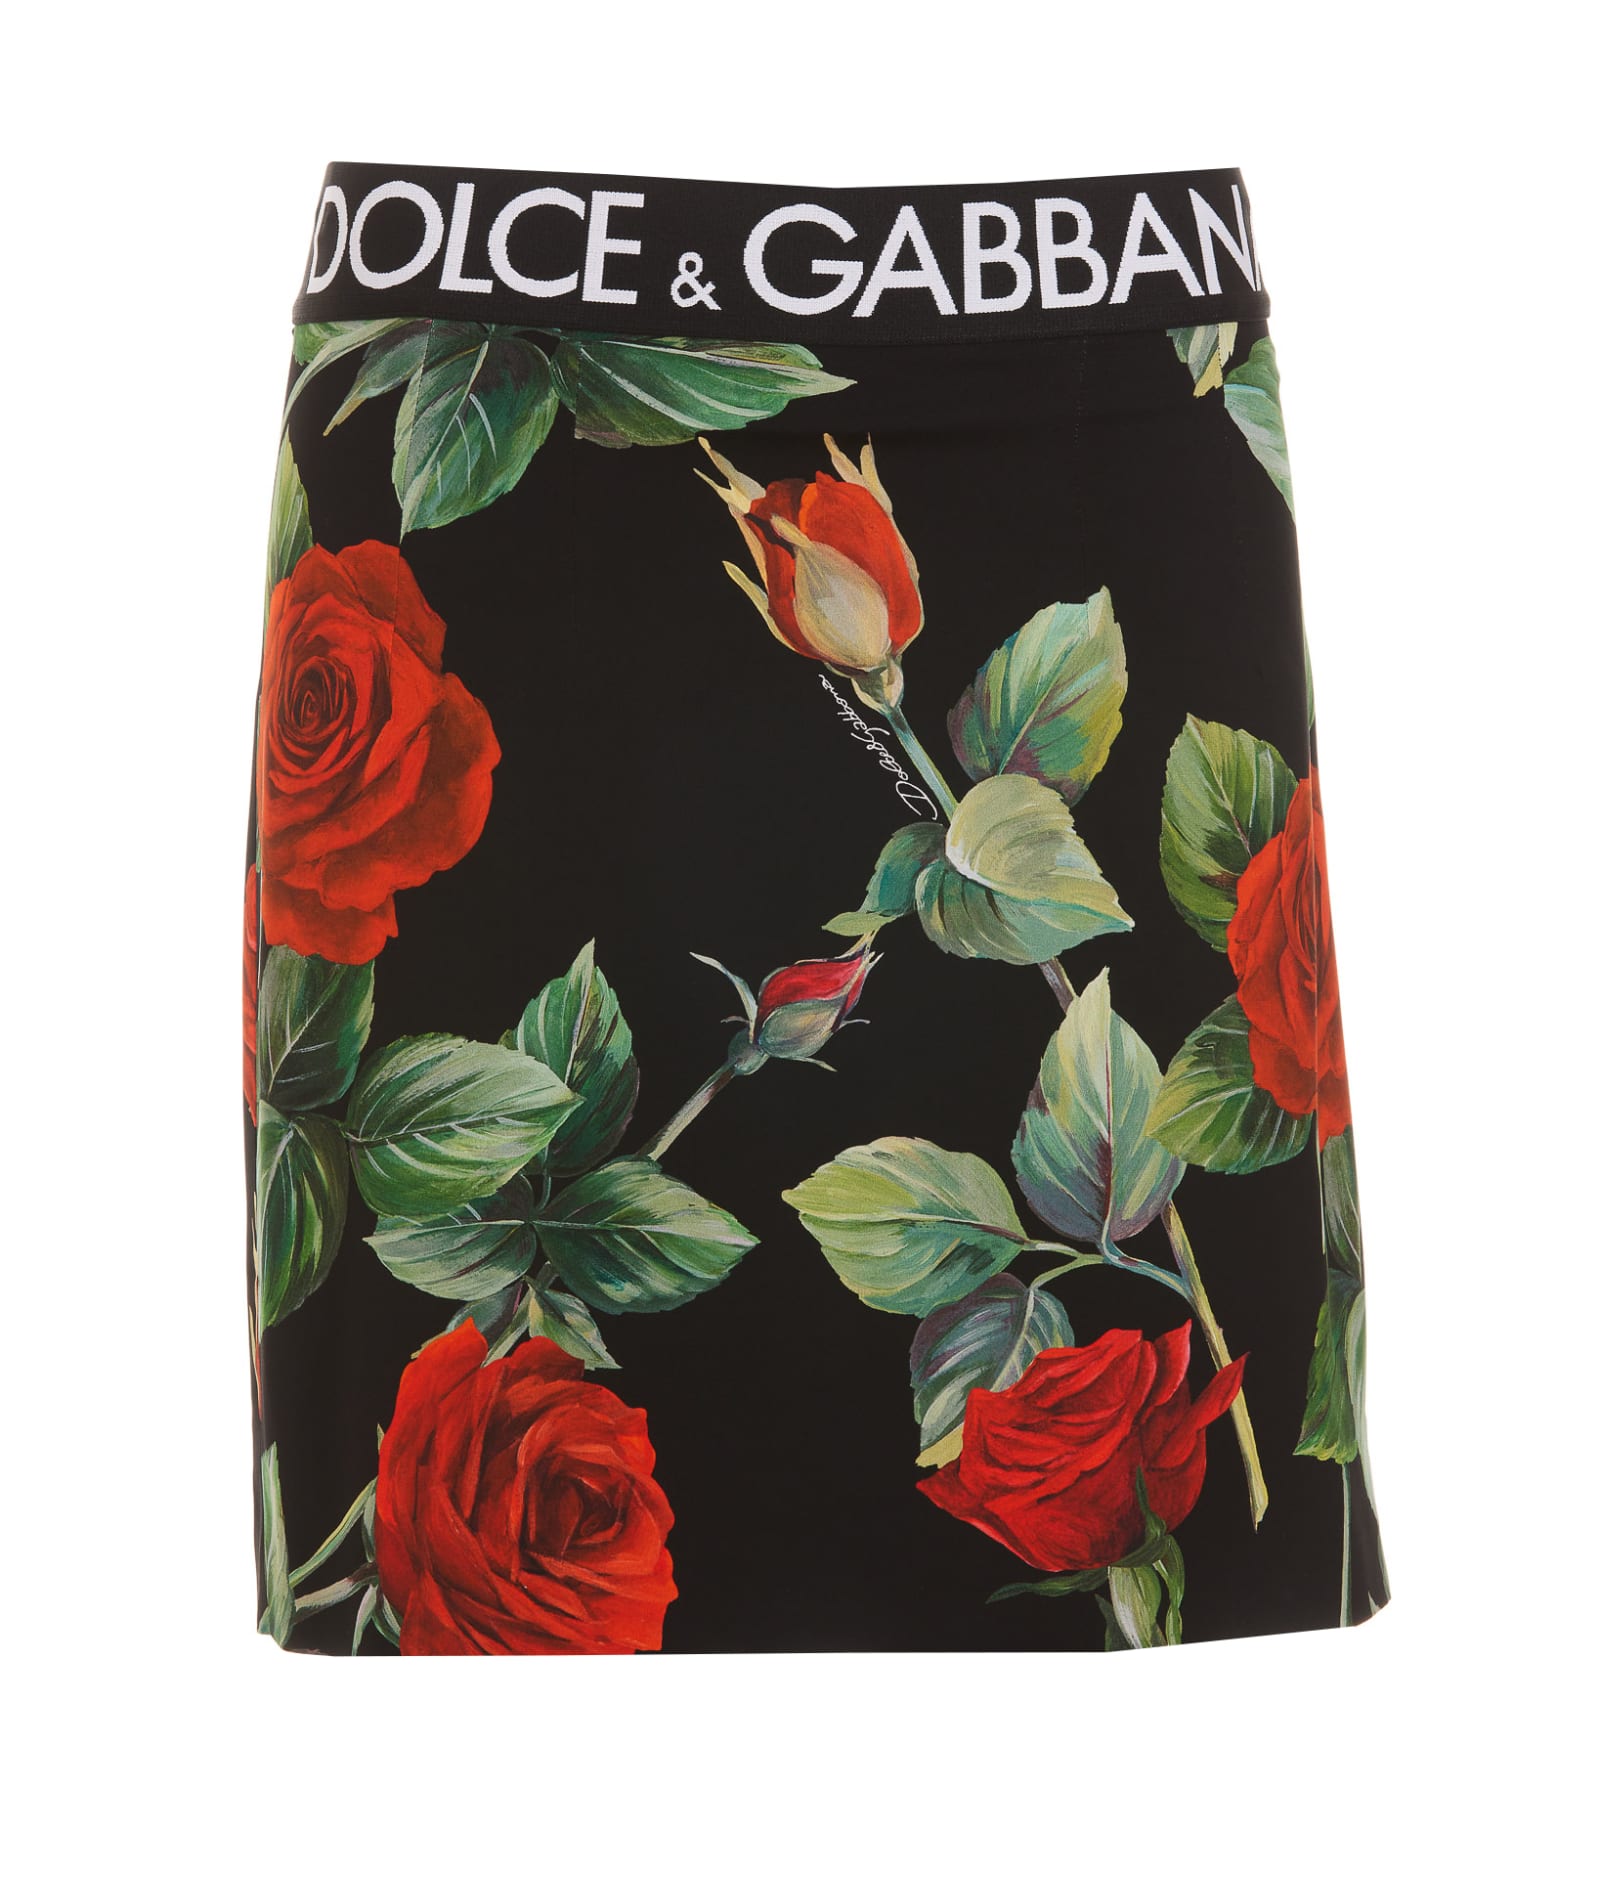 Dolce & Gabbana Logo And Roses Print Mini Skirt